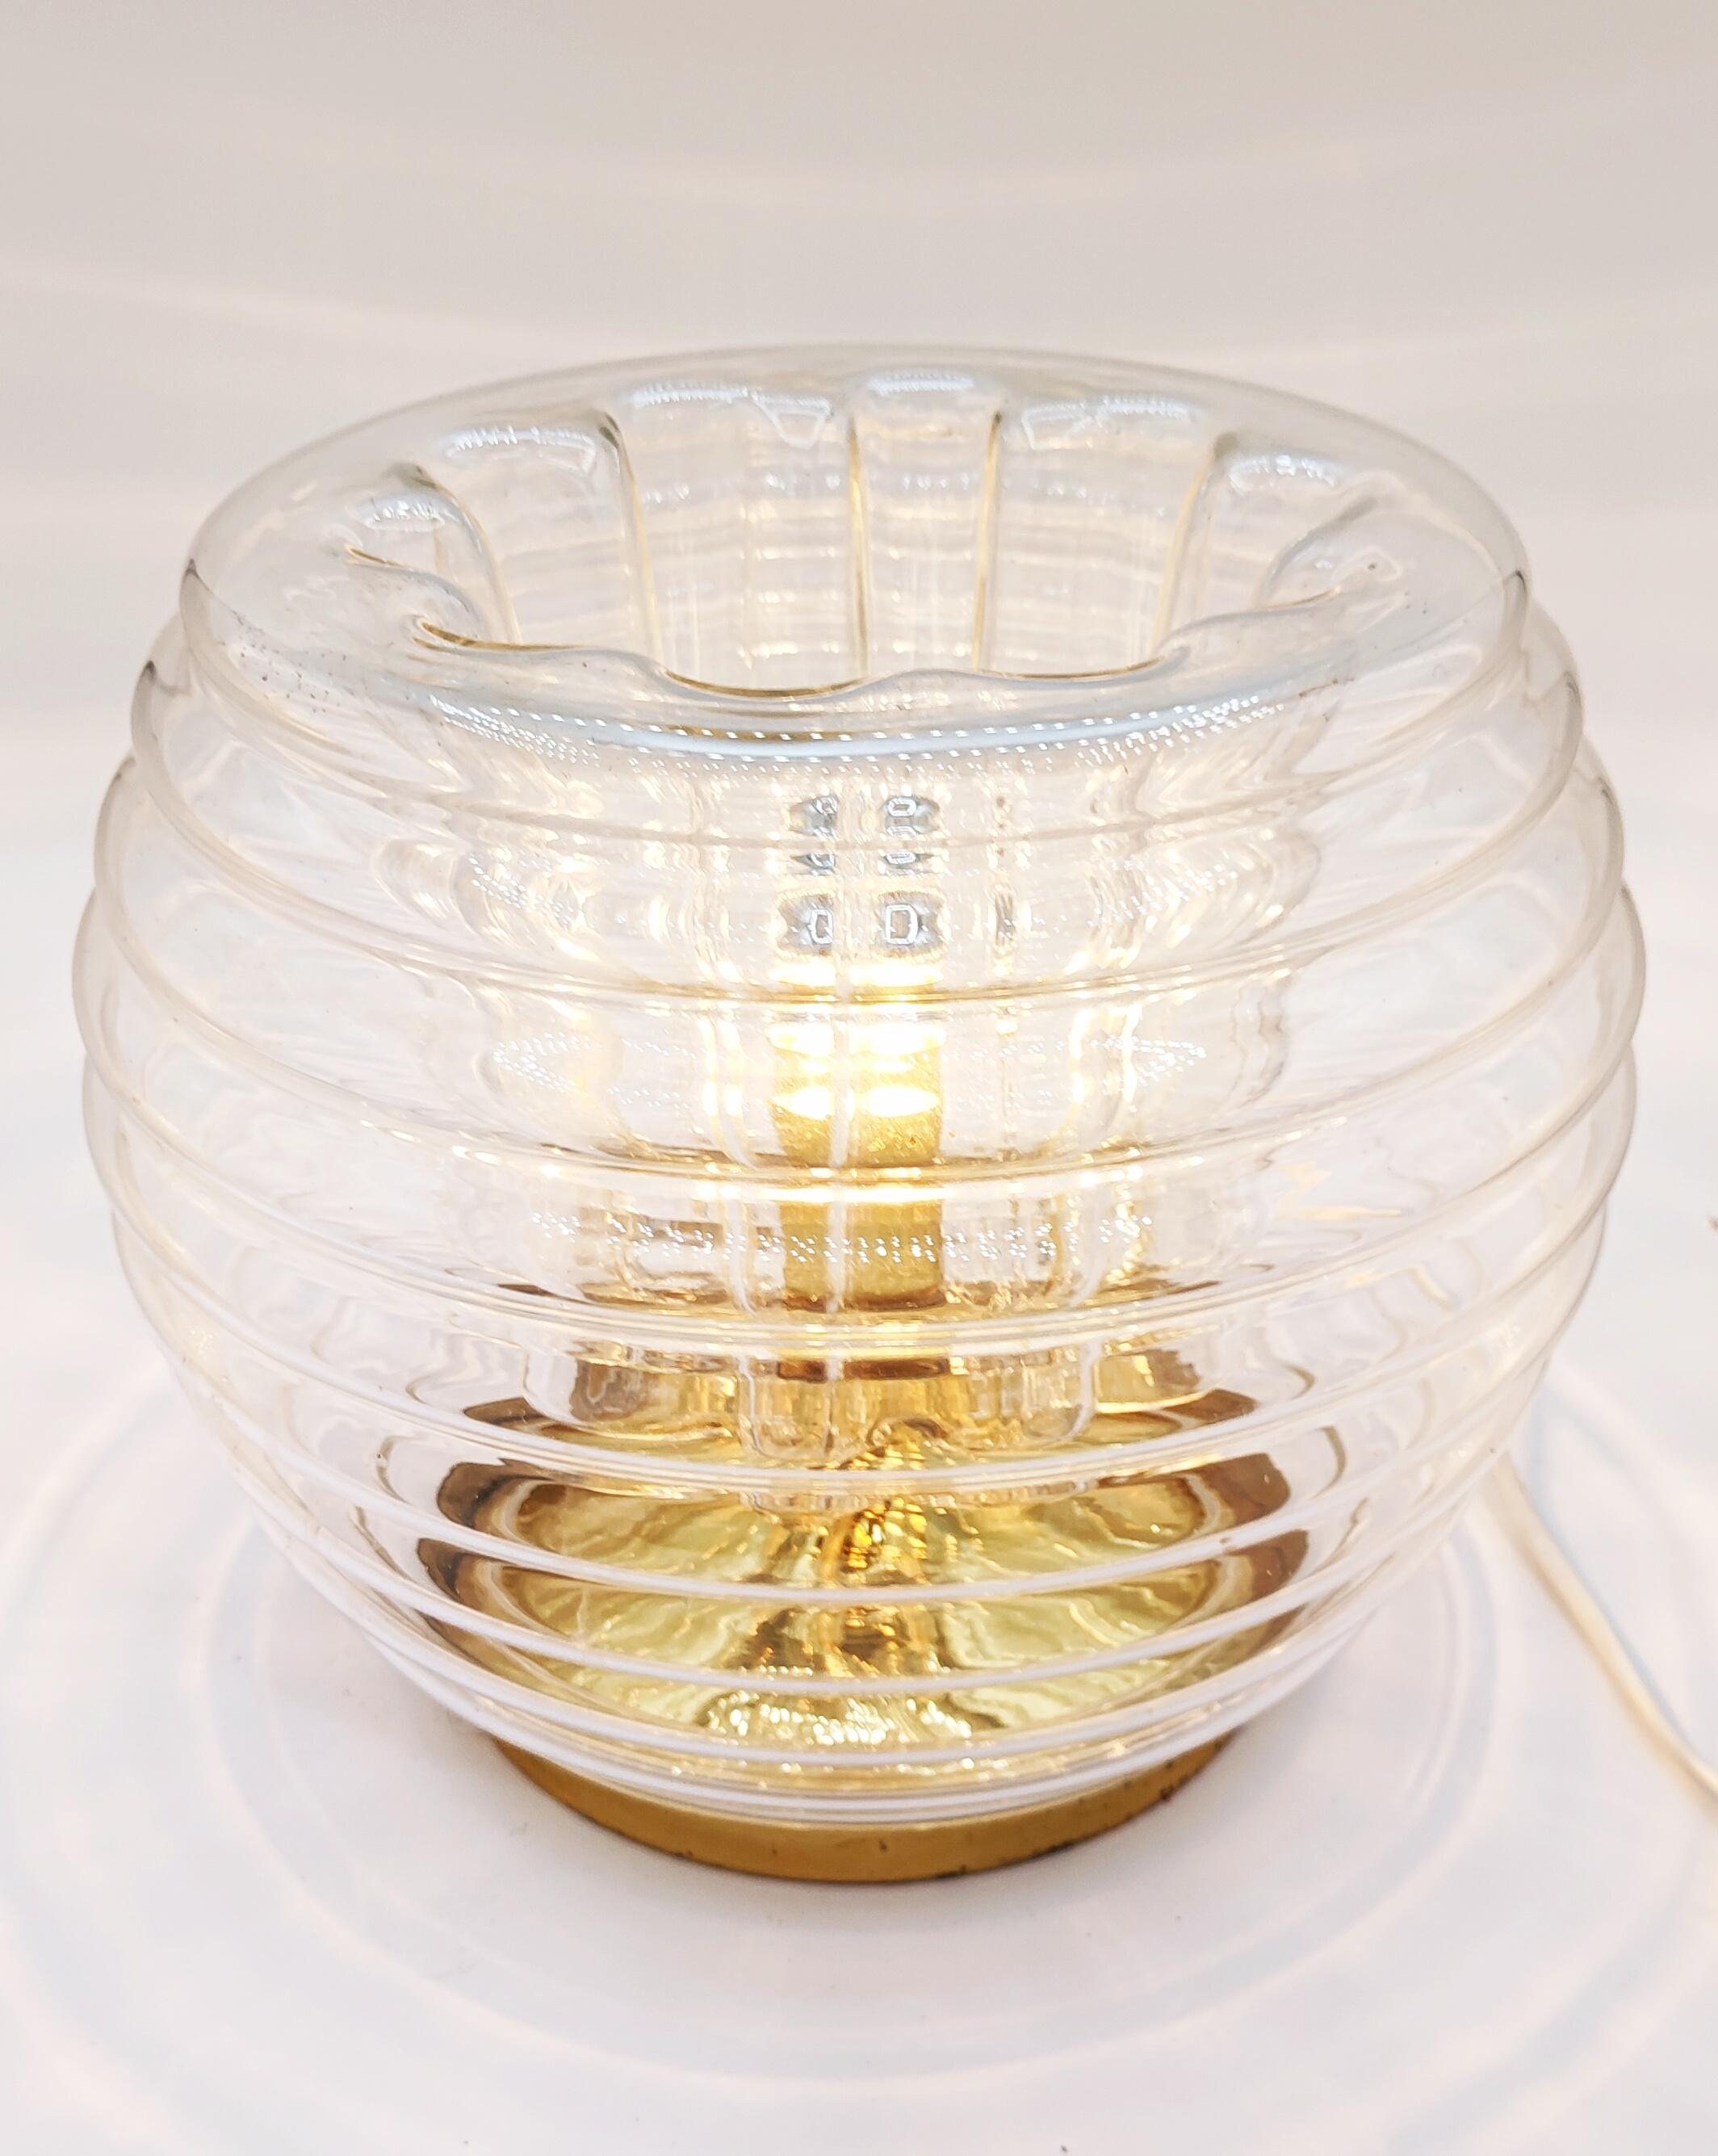 Murano Table Lamp 